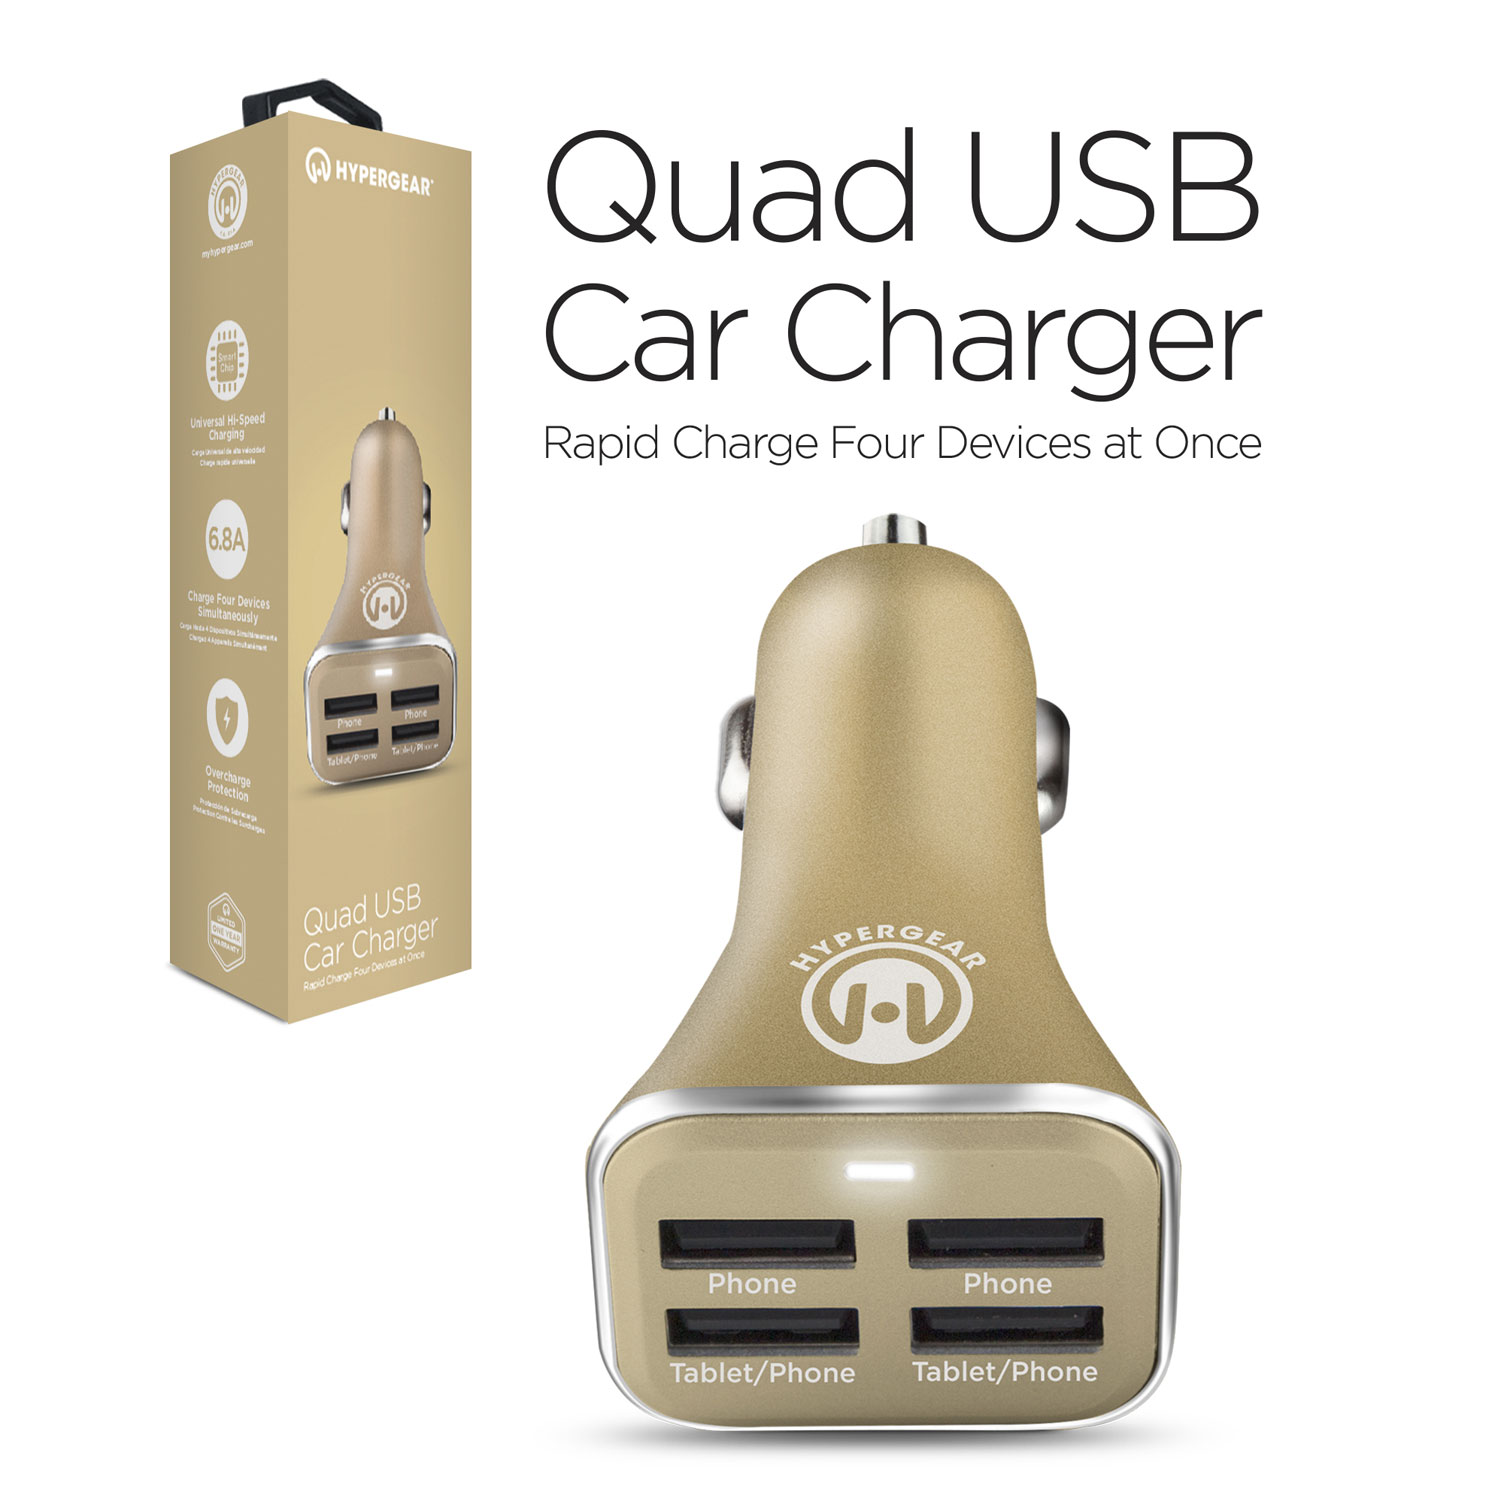 High-Power Quad USB 6.8A Car Charger